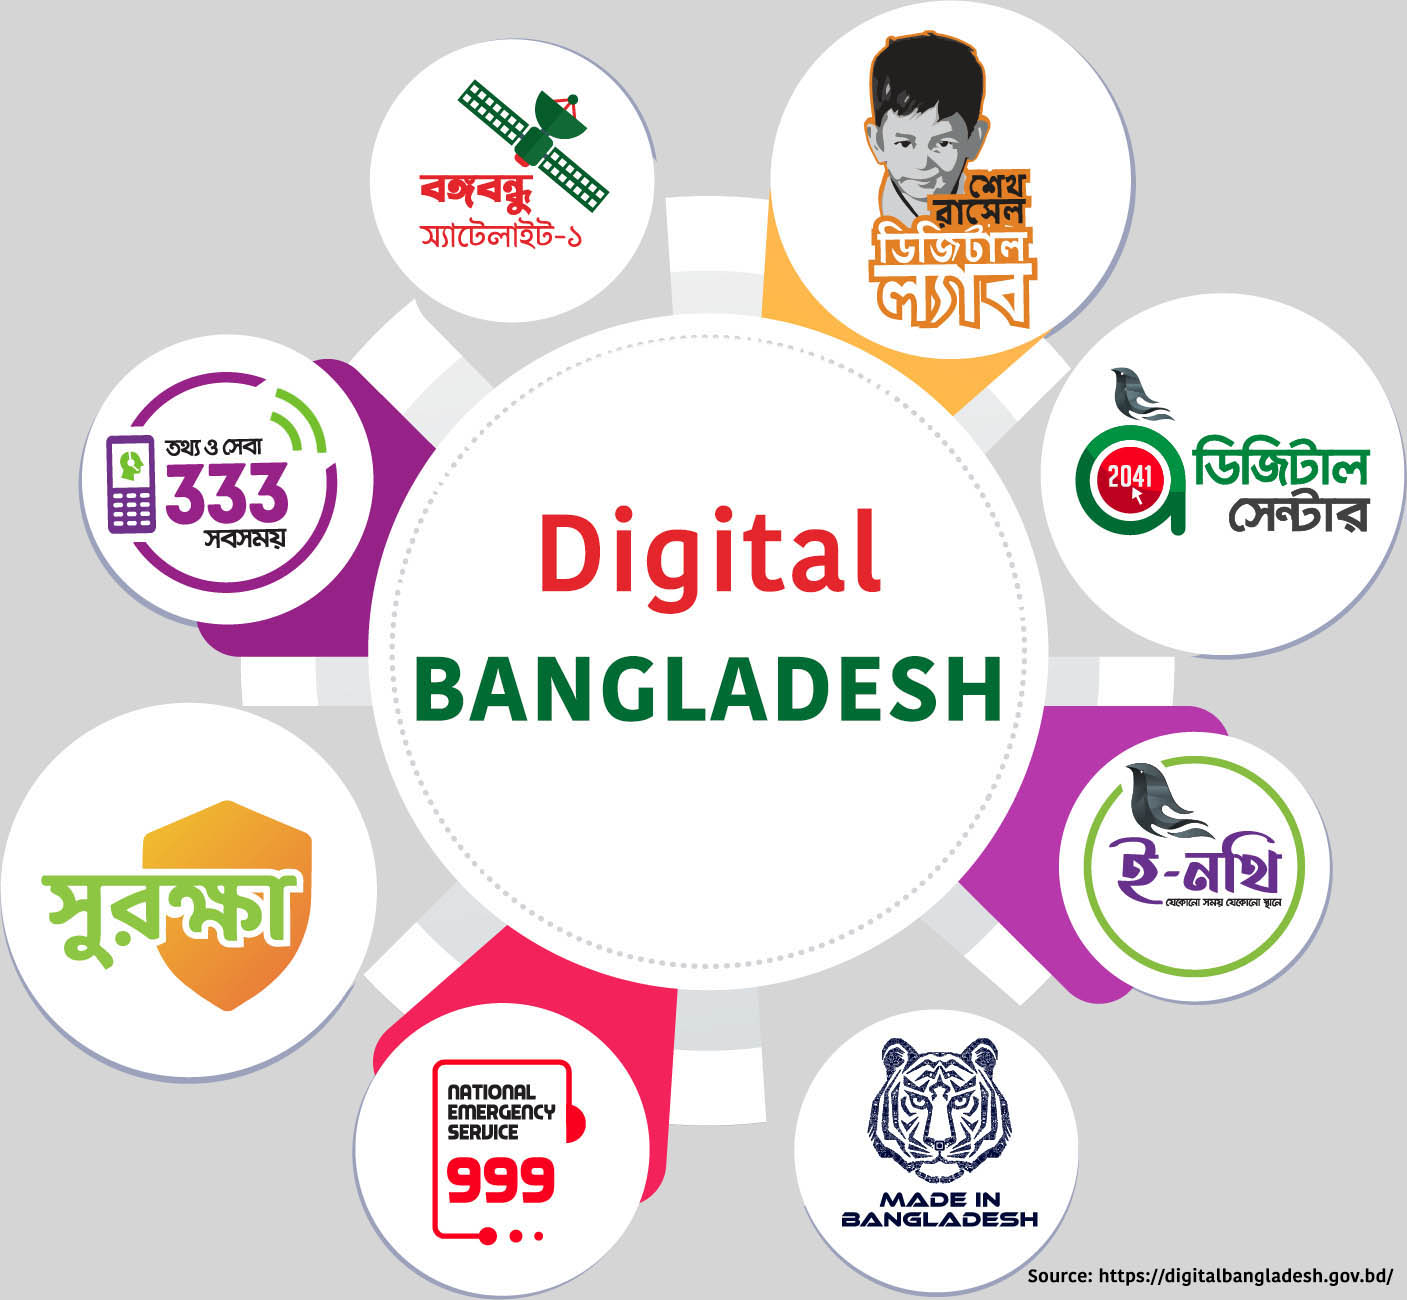 digital bangladesh essay 250 words